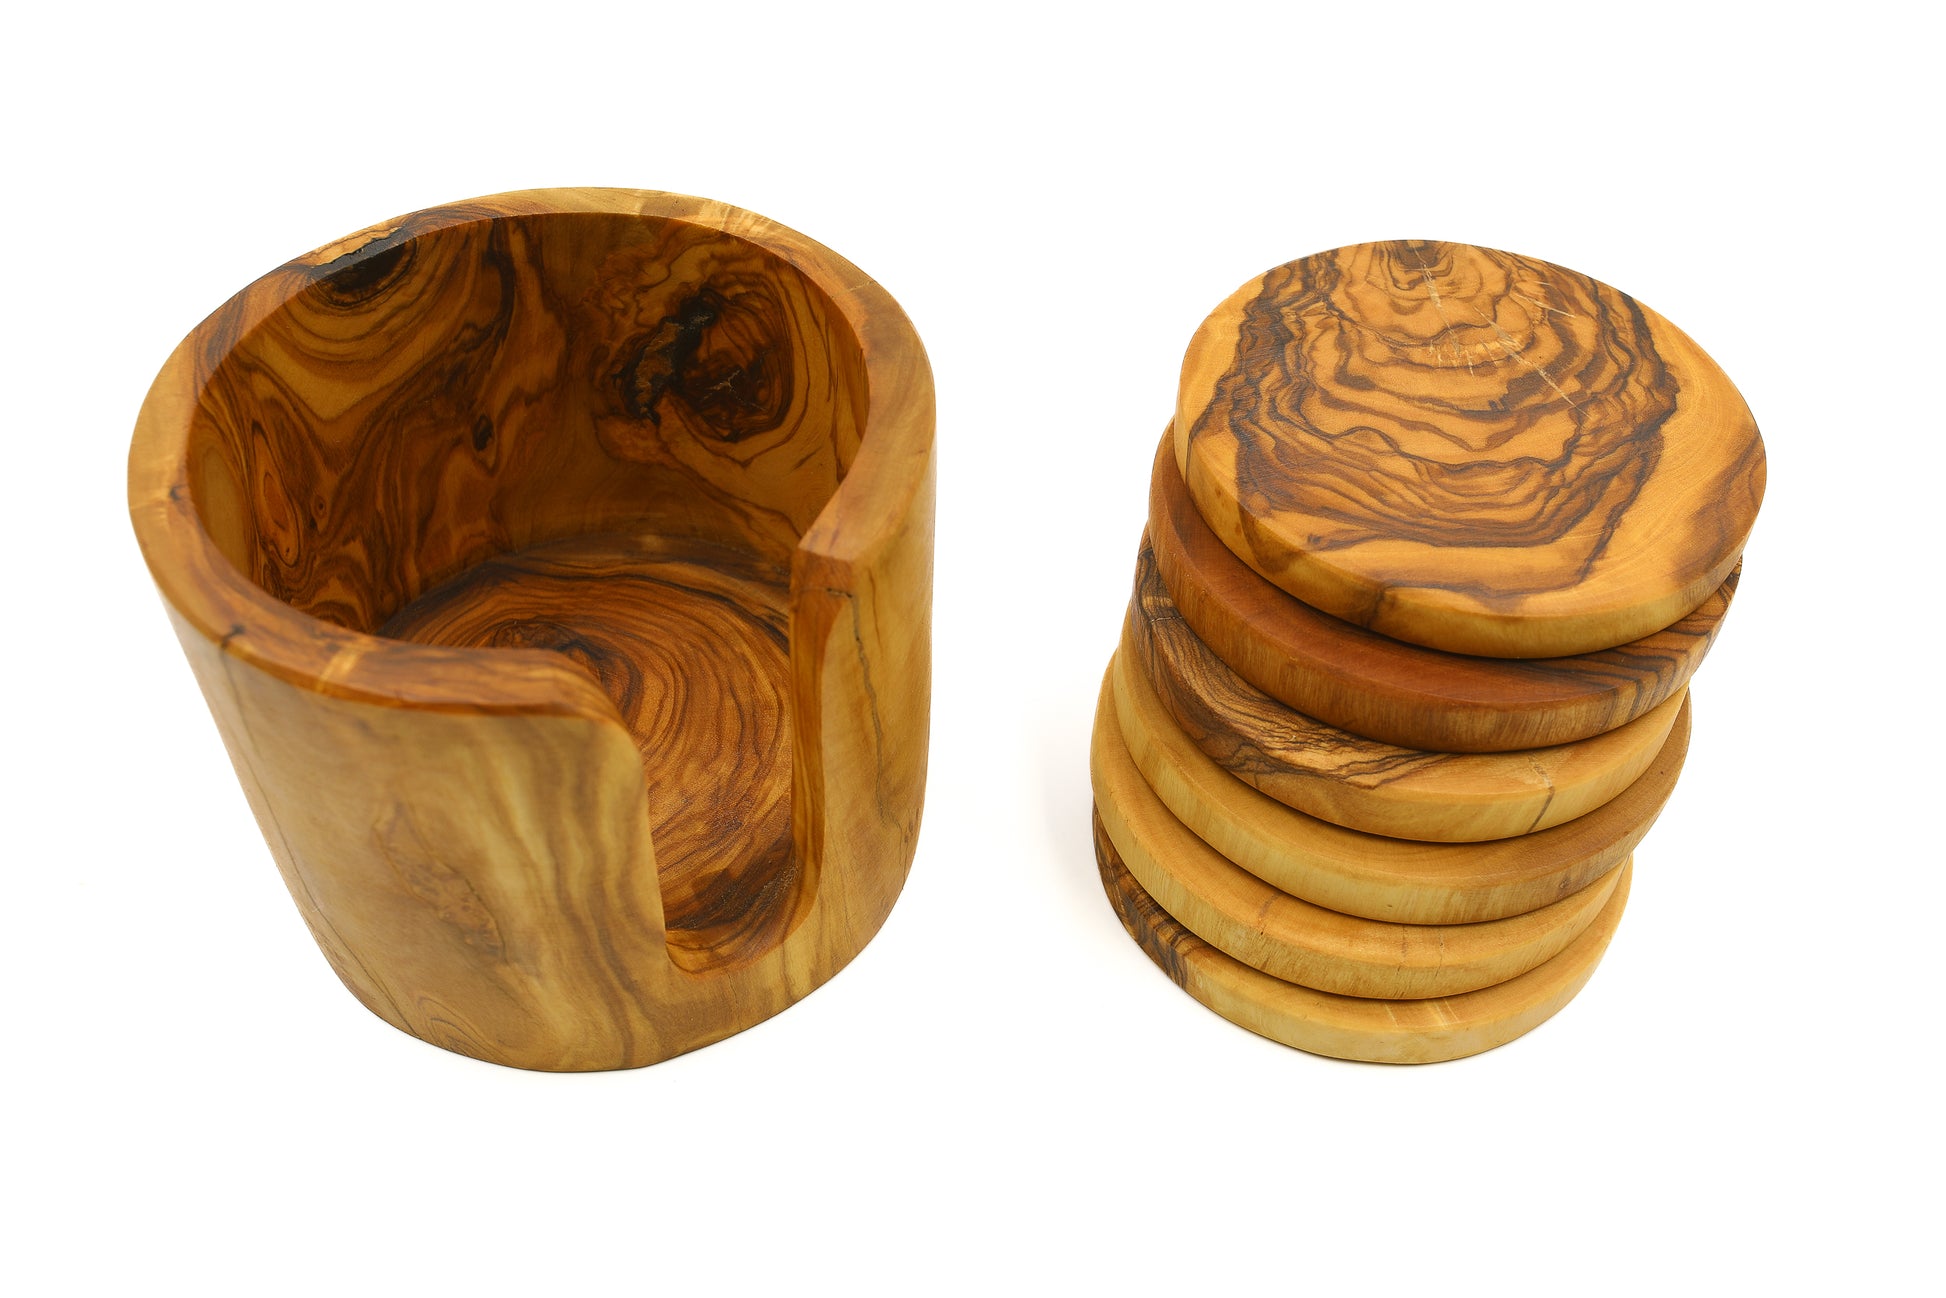 Handmade Olive Wood Table Coasters and Heat-Resistant Trivet